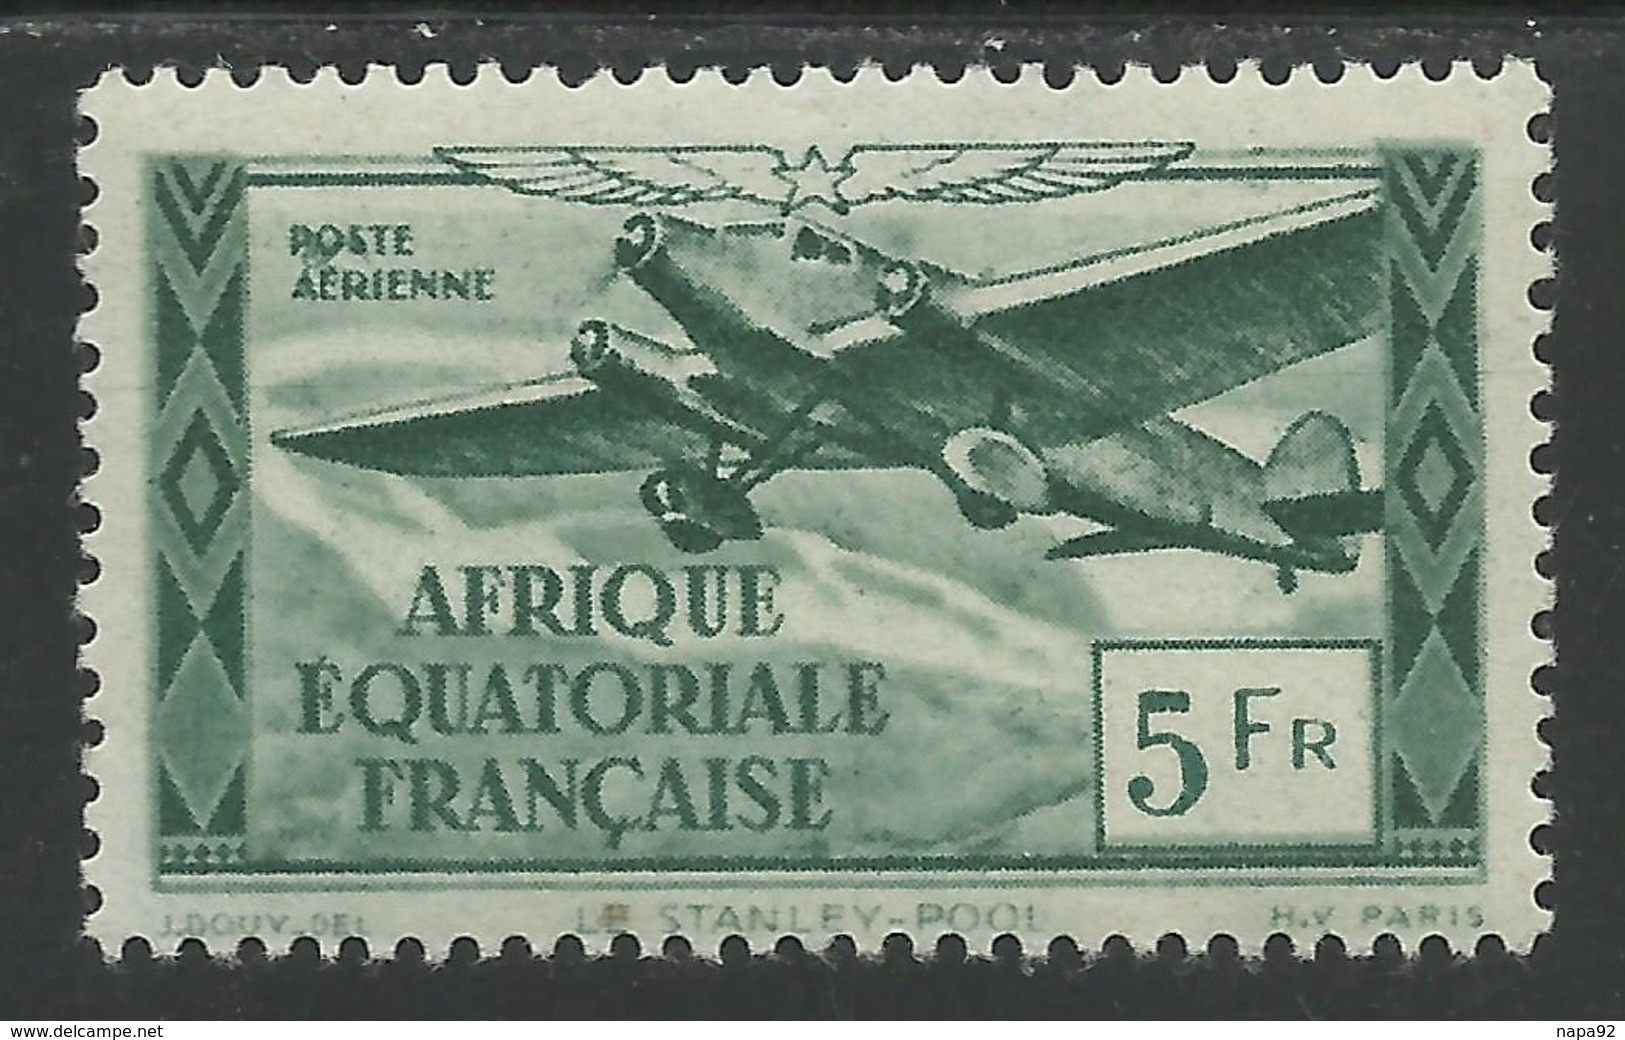 AFRIQUE EQUATORIALE FRANCAISE - AEF - A.E.F. - 1944 - YT PA 35** - Nuevos